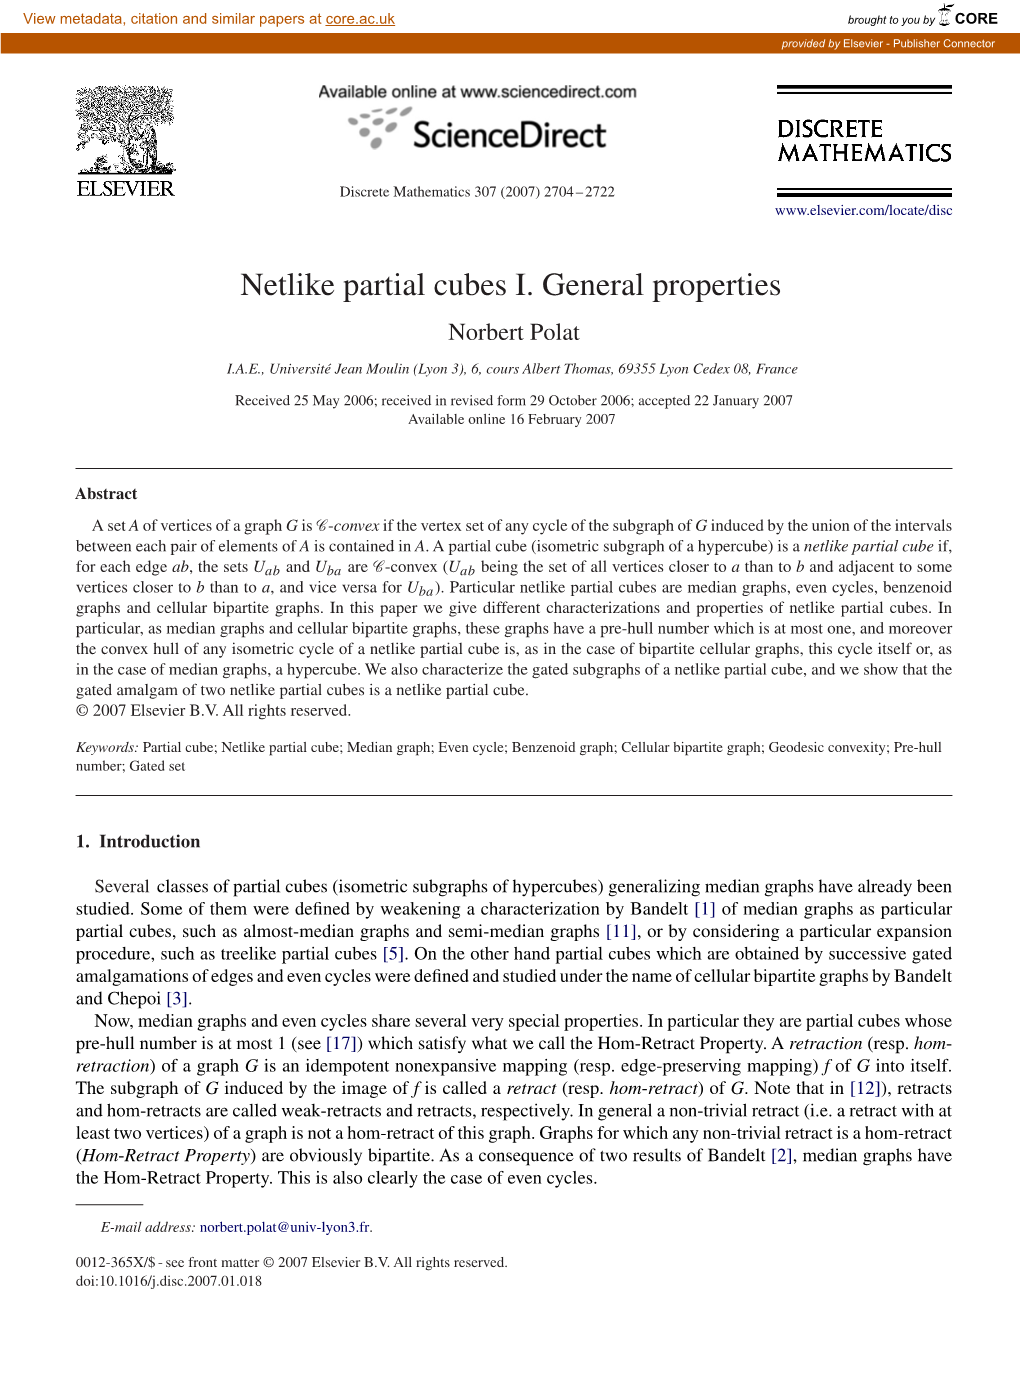 Netlike Partial Cubes I. General Properties Norbert Polat